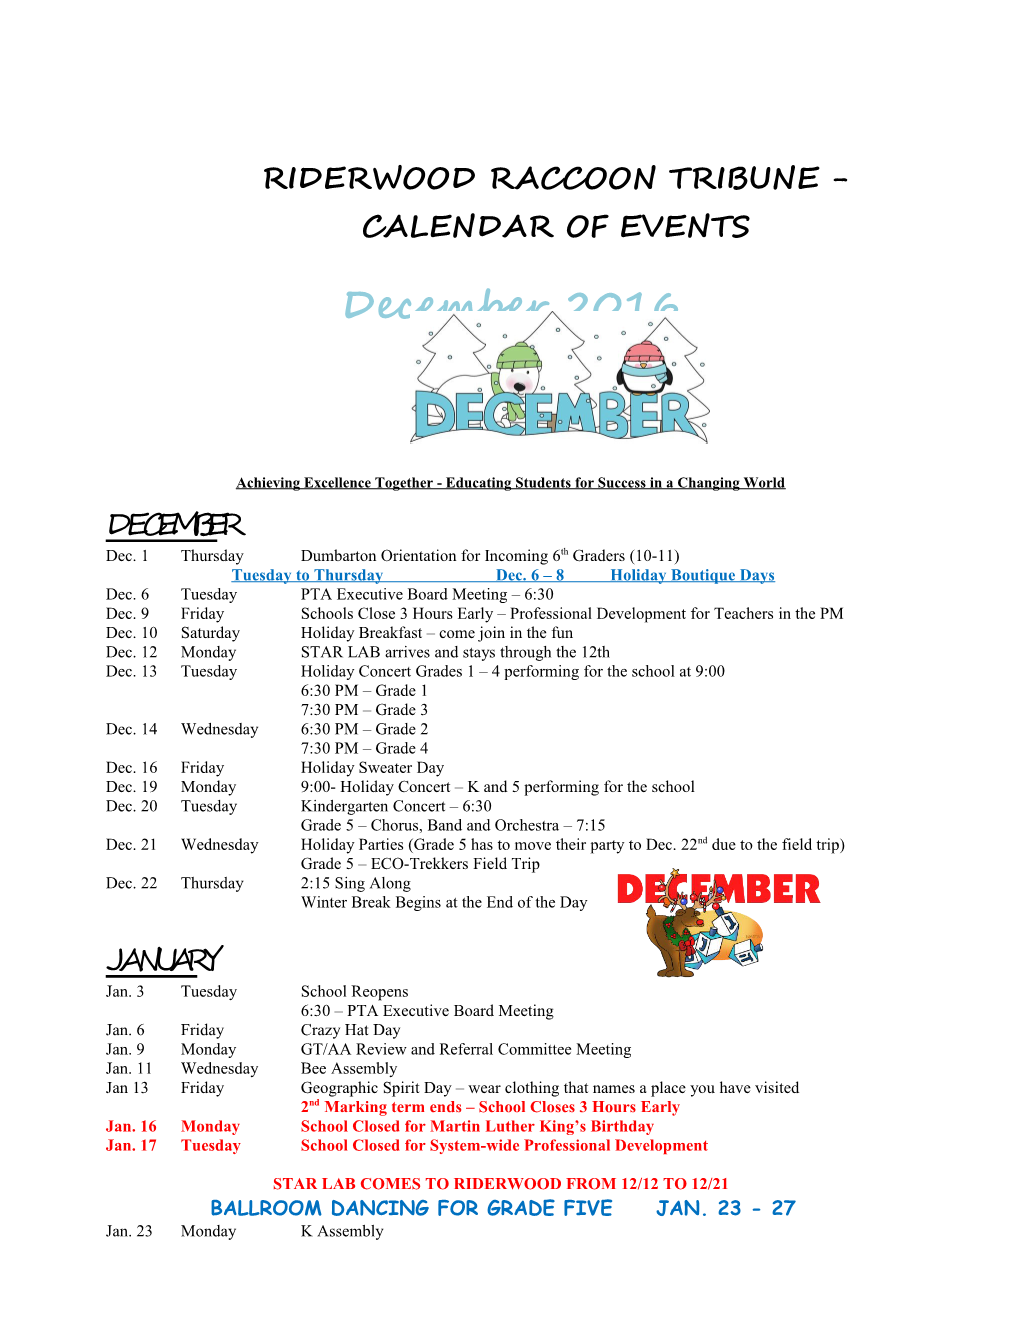 Riderwood Raccoon Tribune - Calendar of Events